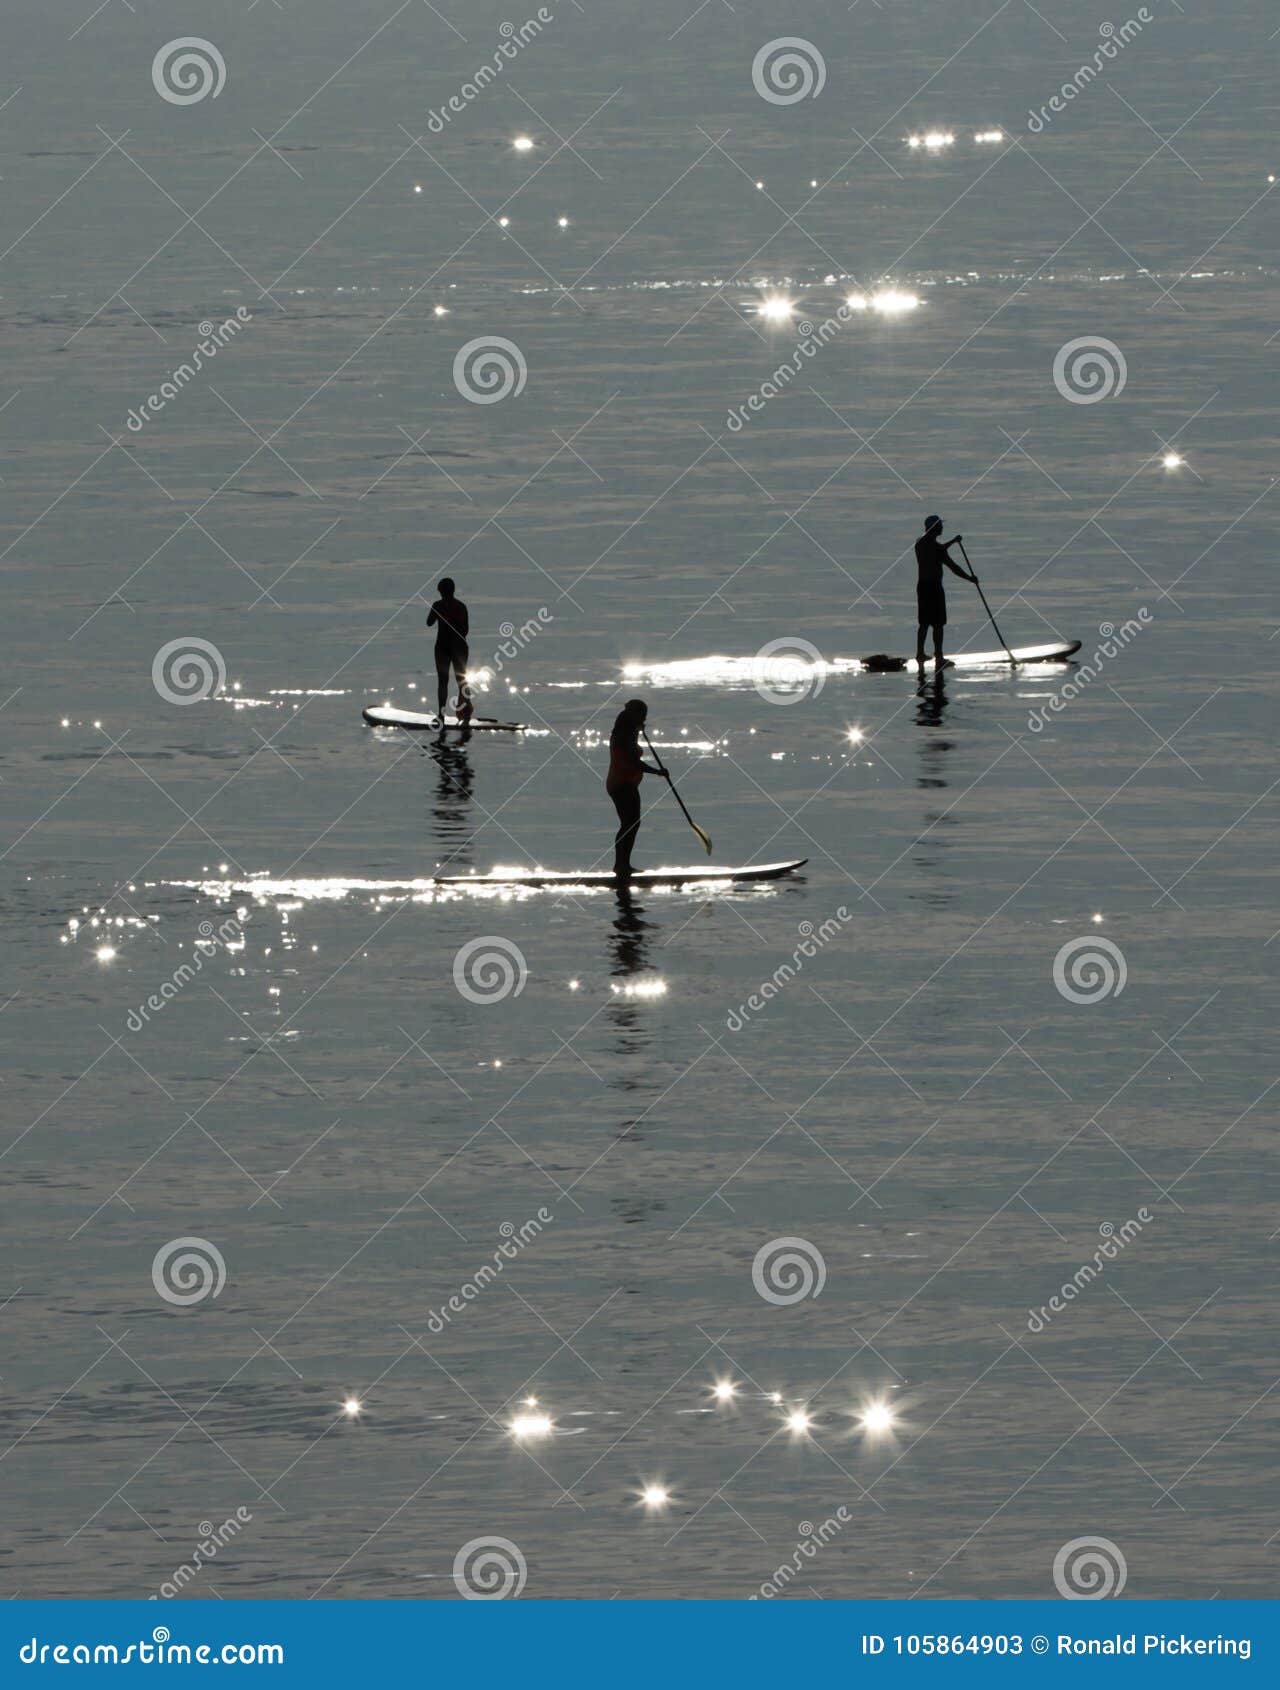 sun seekers at oval beach